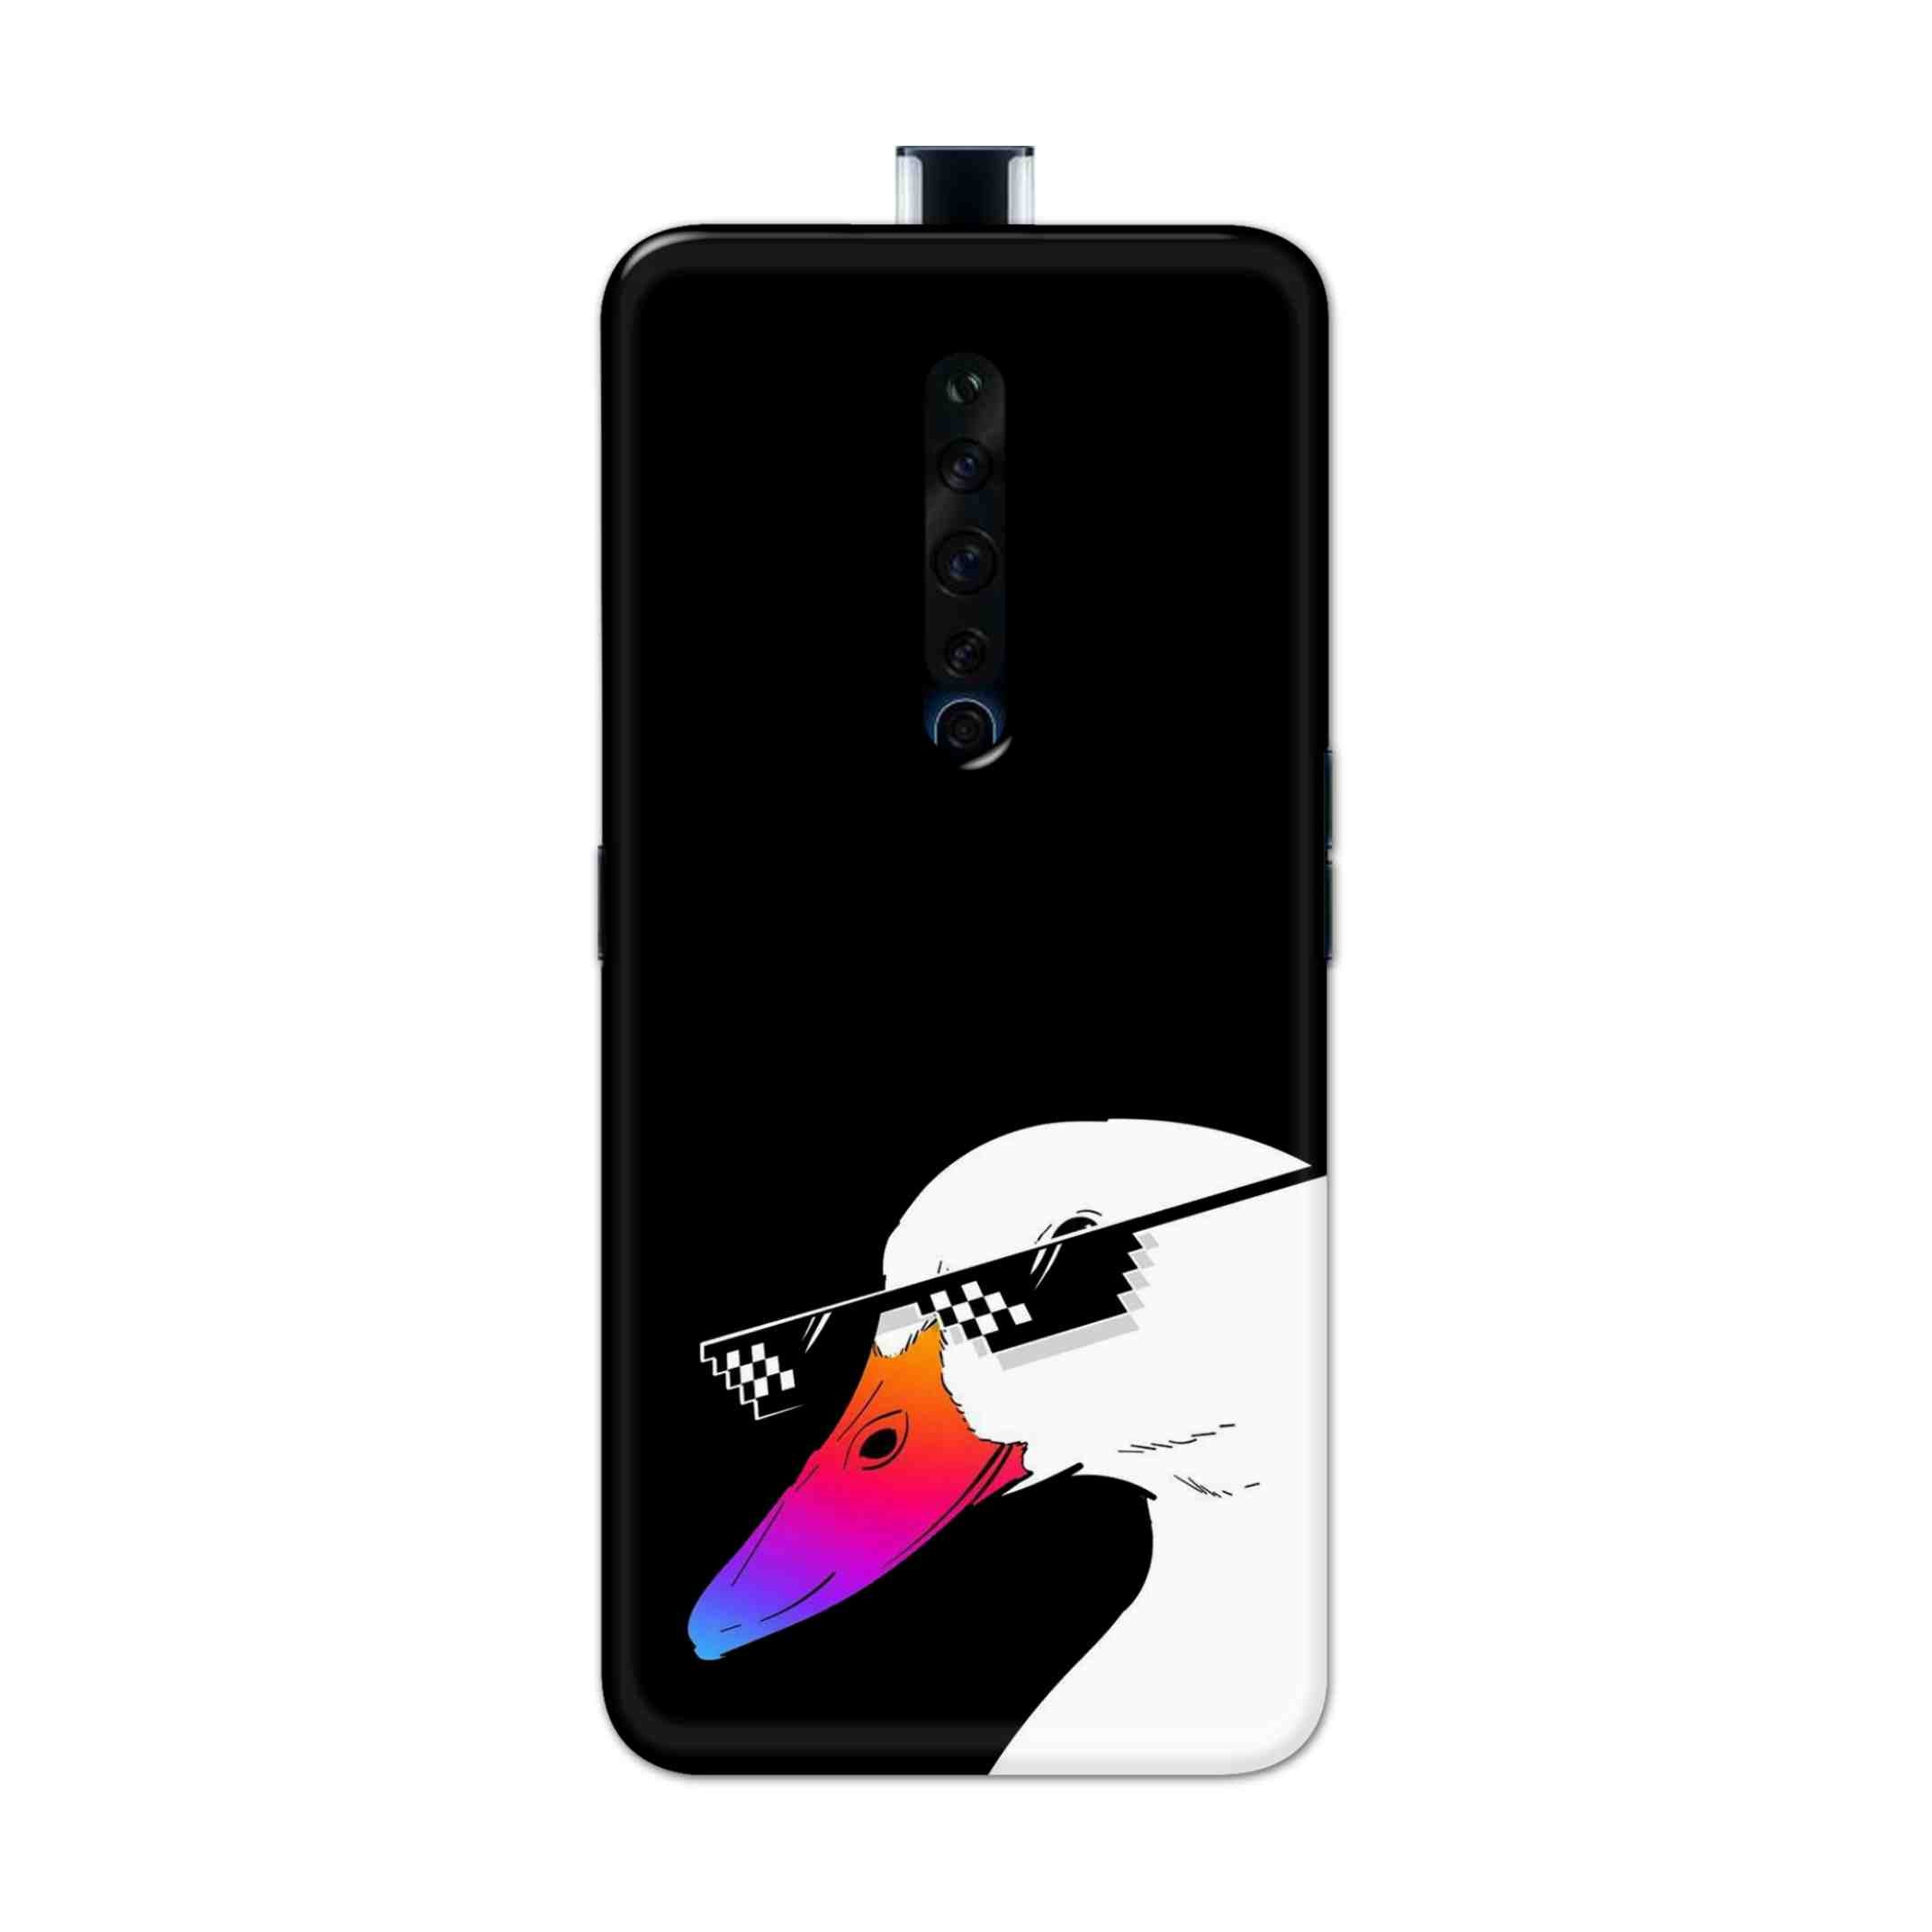 Buy Neon Duck Hard Back Mobile Phone Case Cover For Oppo Reno 2Z Online